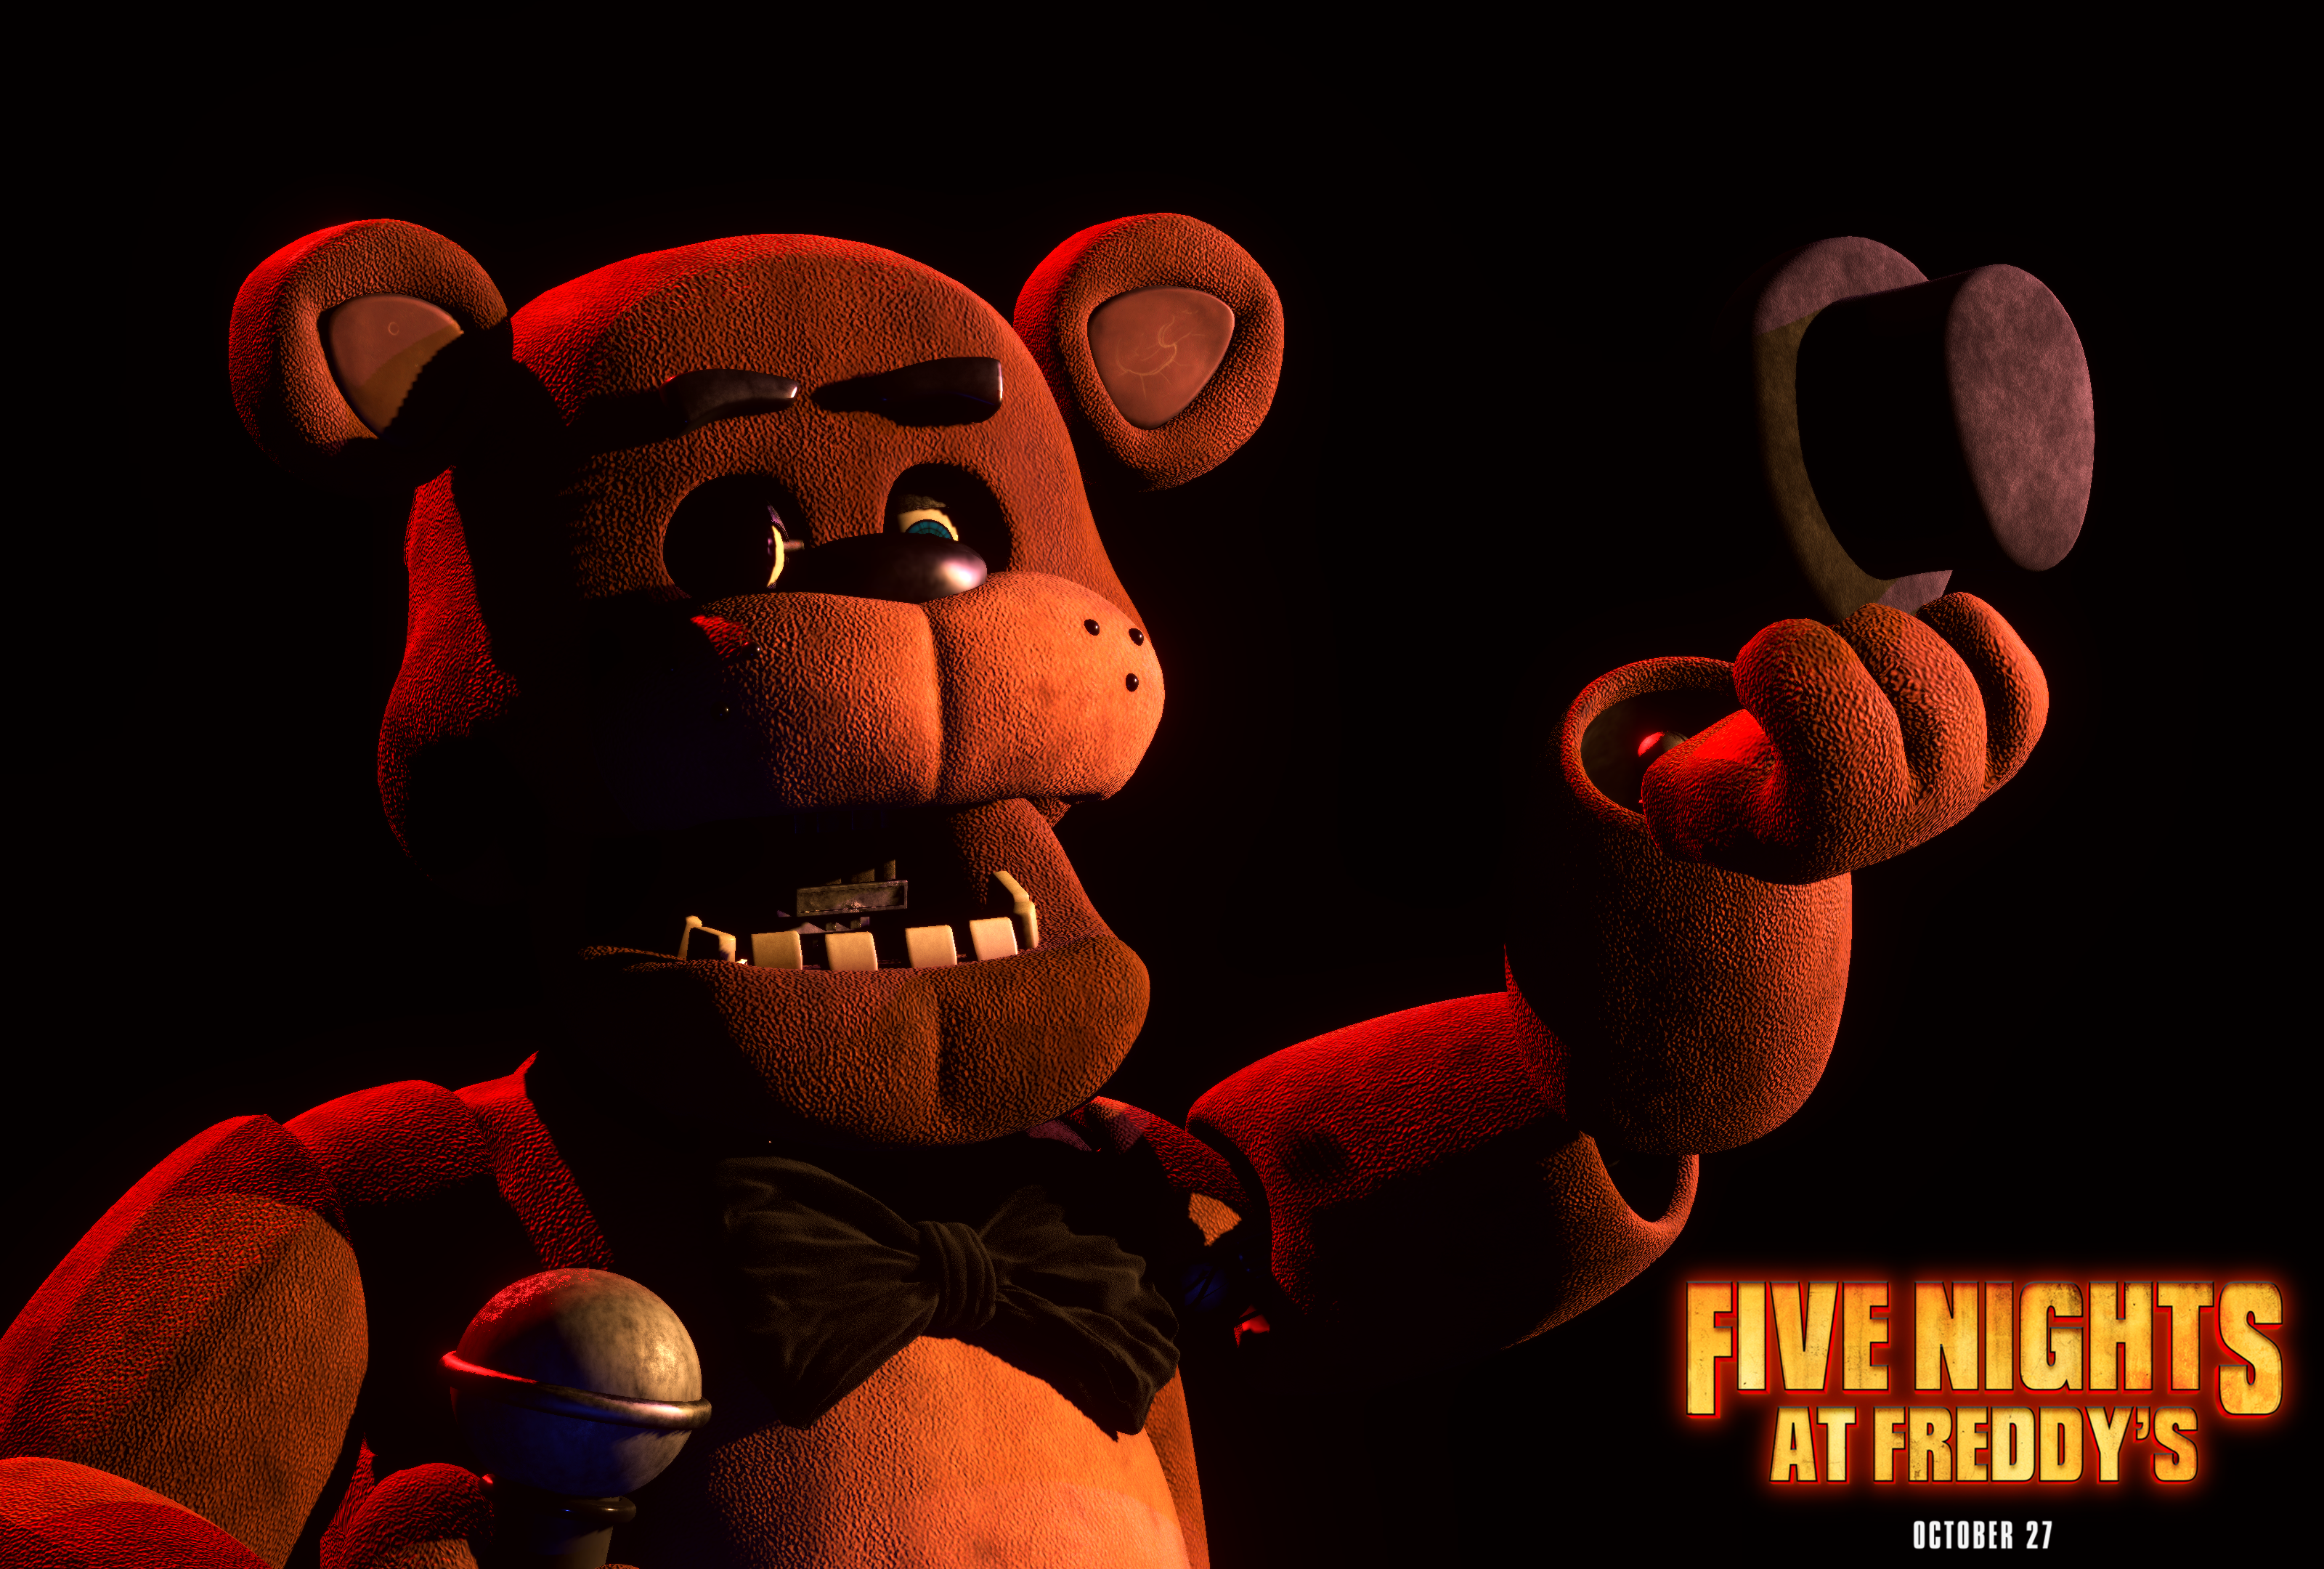 Five Nights at Freddy's 2 Movie Poster by FreddyTheFazbear on DeviantArt